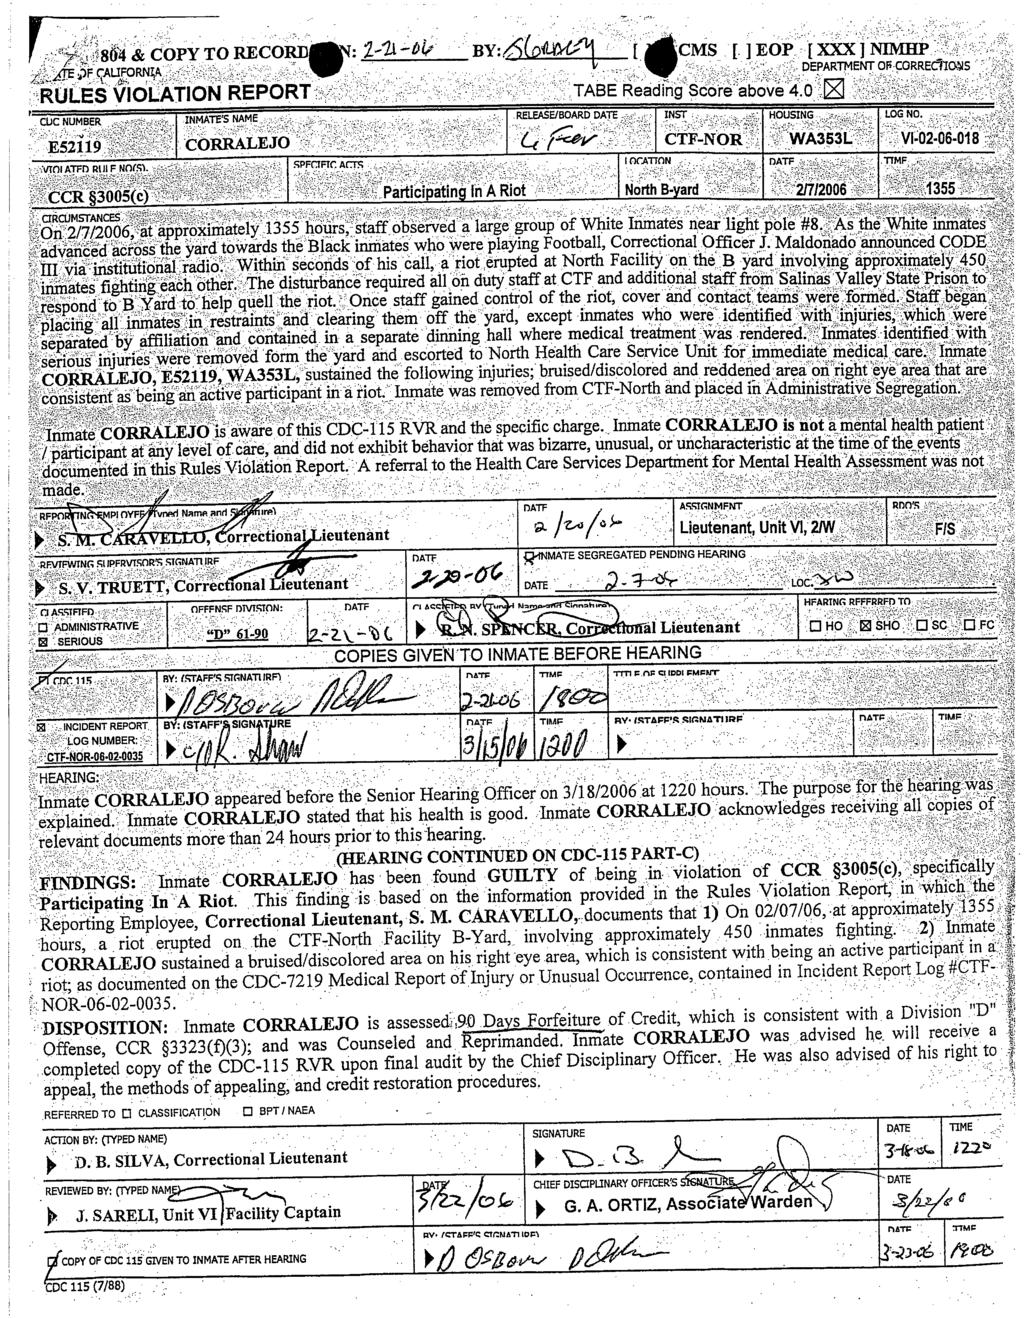 Case 5:08-cv-00296-RMW Document